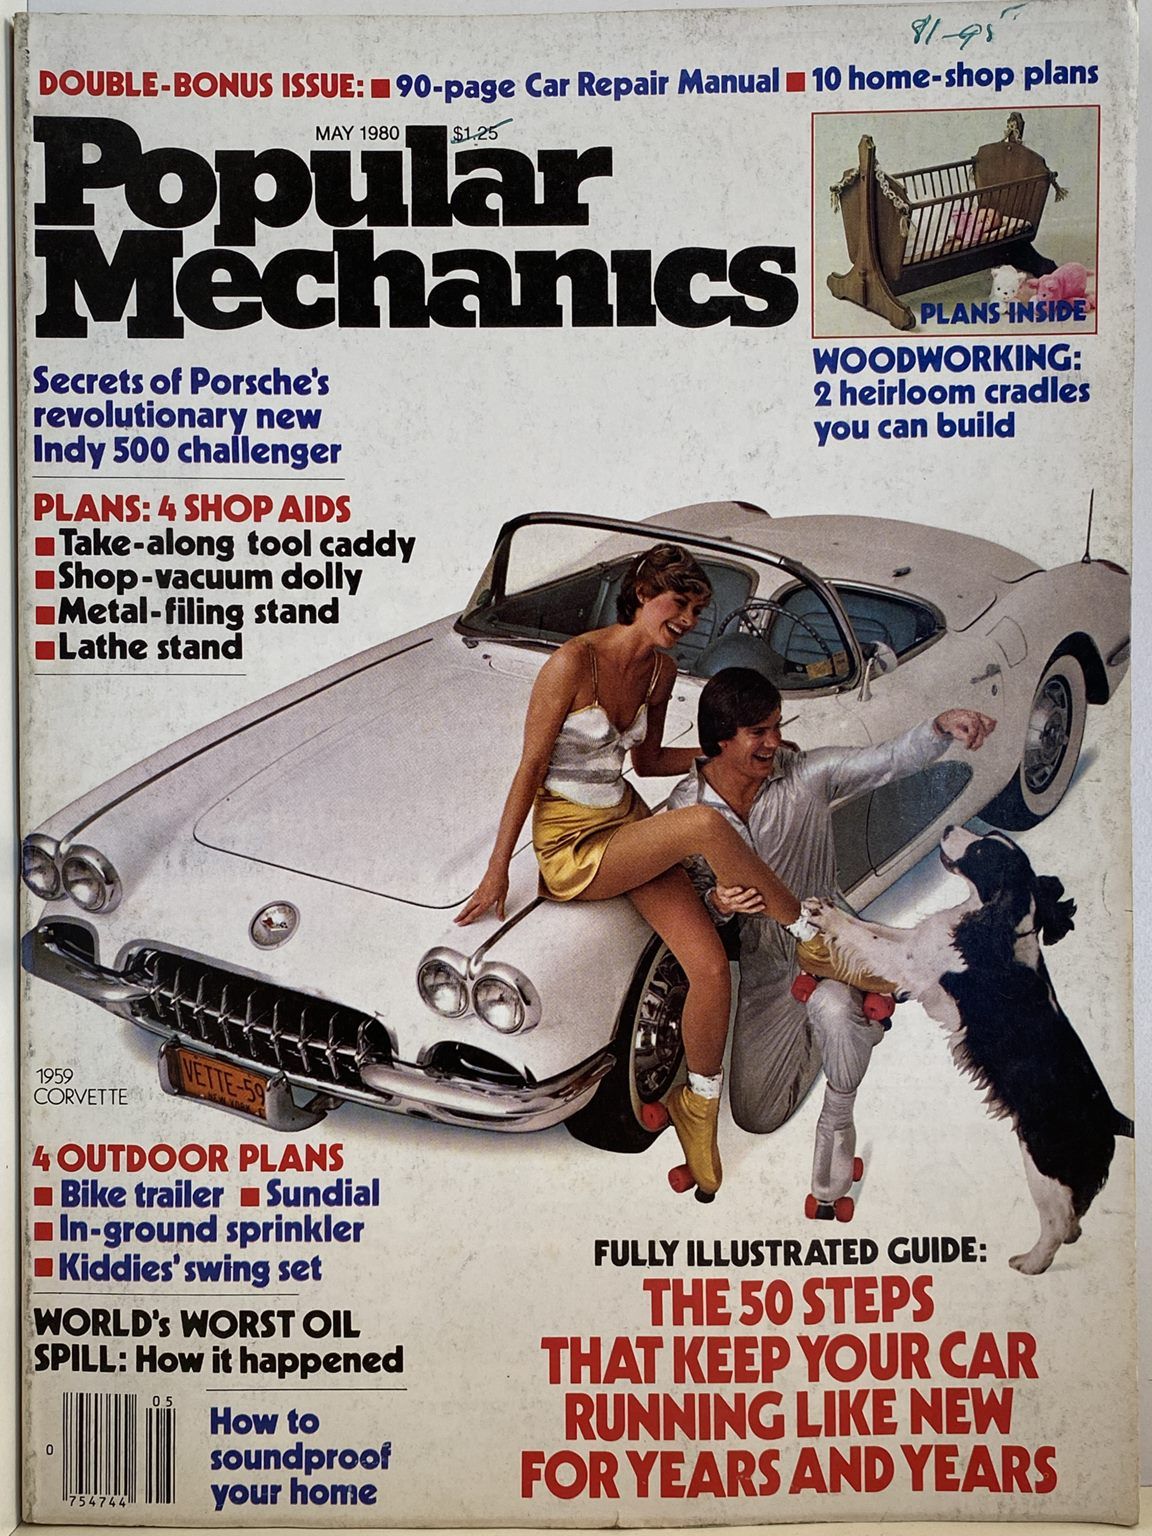 VINTAGE MAGAZINE: Popular Mechanics - Vol. 153, No. 5 - May 1980